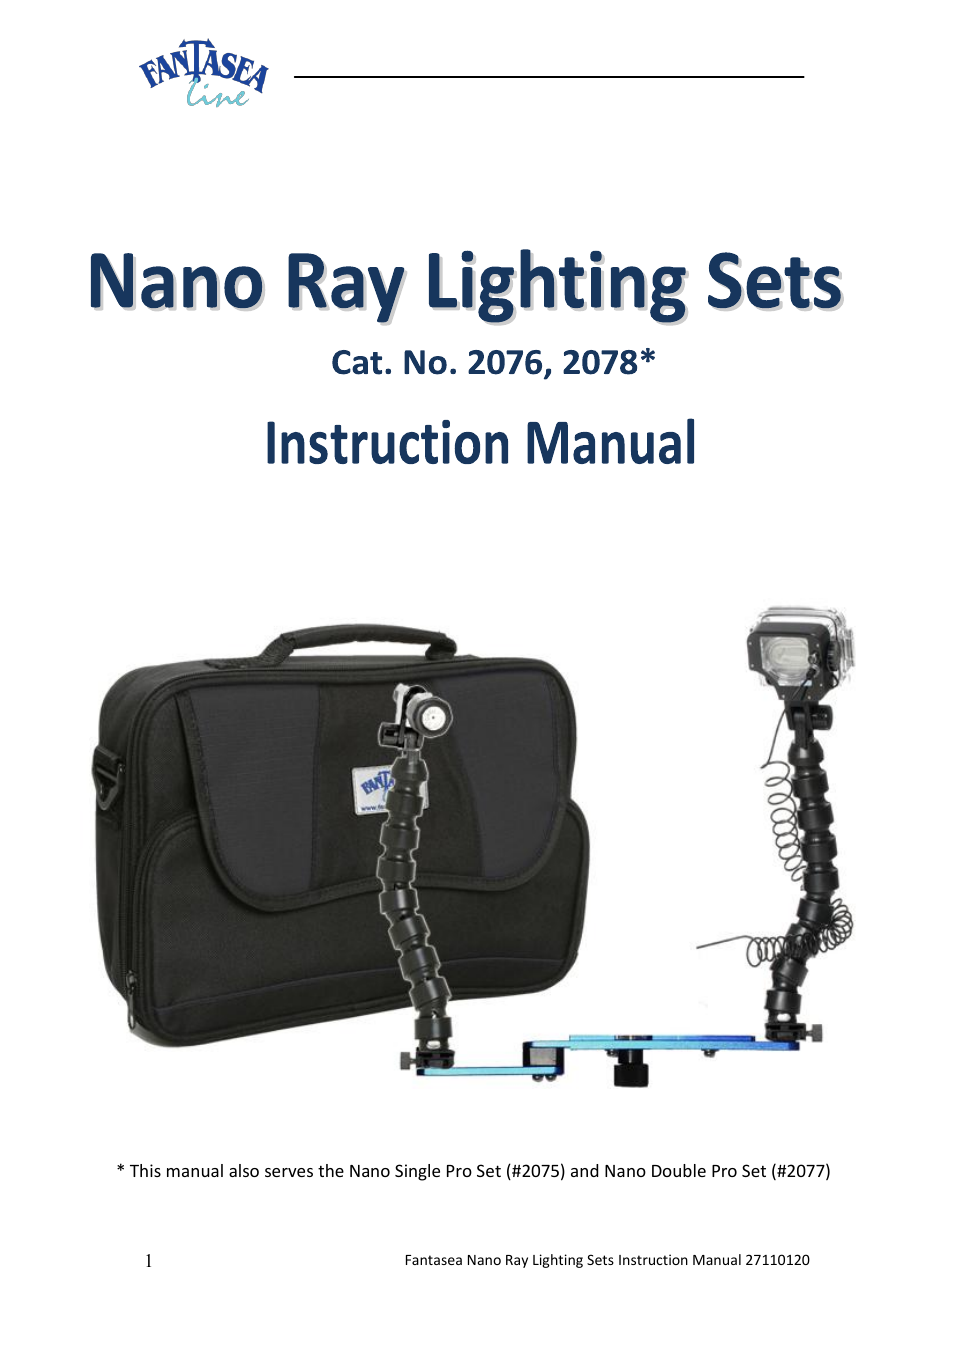 Nano Flash Focus Lighting Set